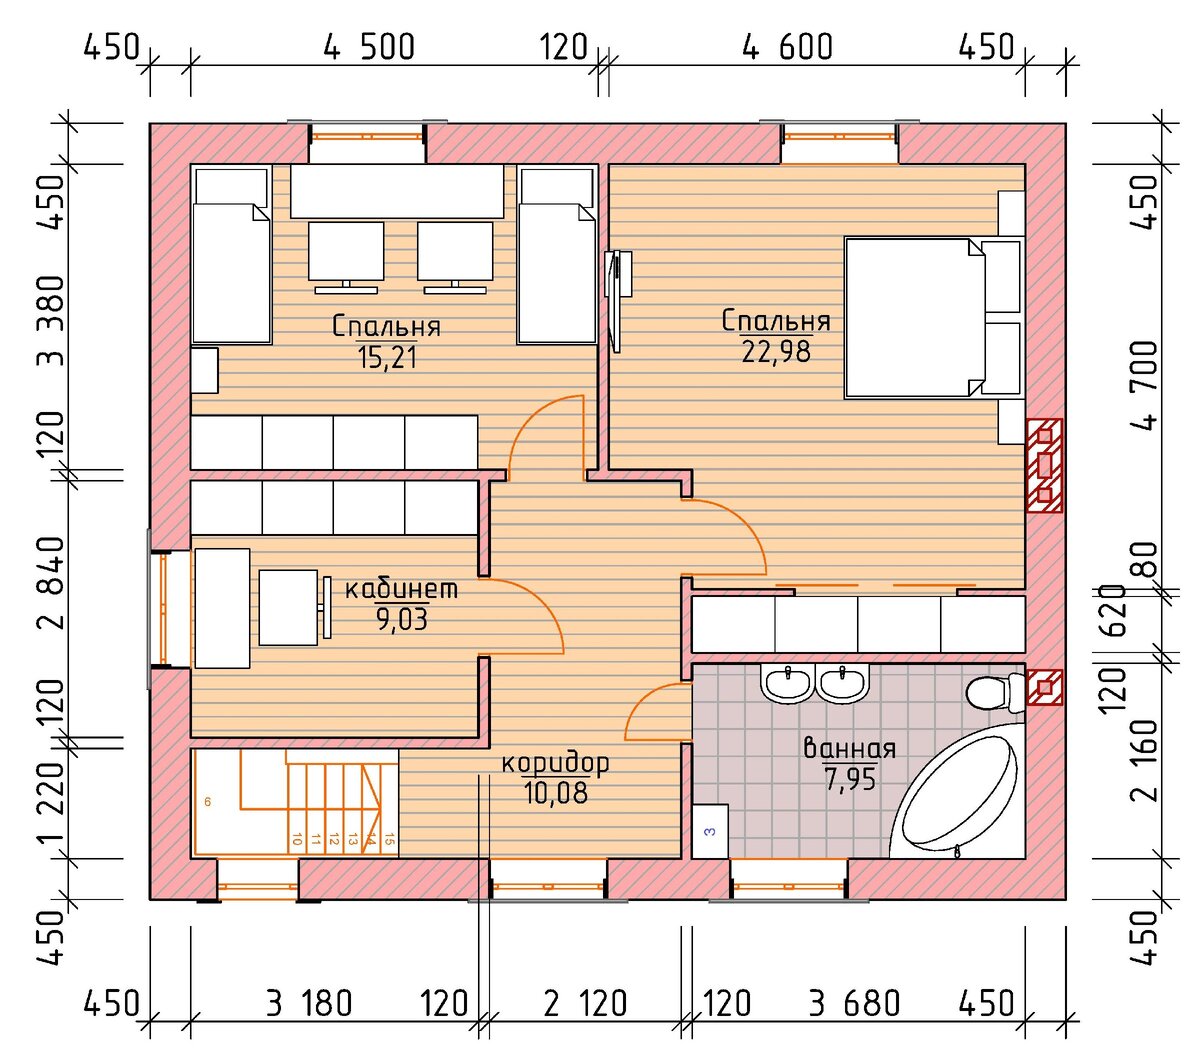 Двухэтажный дом 8,6 х 10 м, из кирпича, общей площадью 130 кв.м. ??